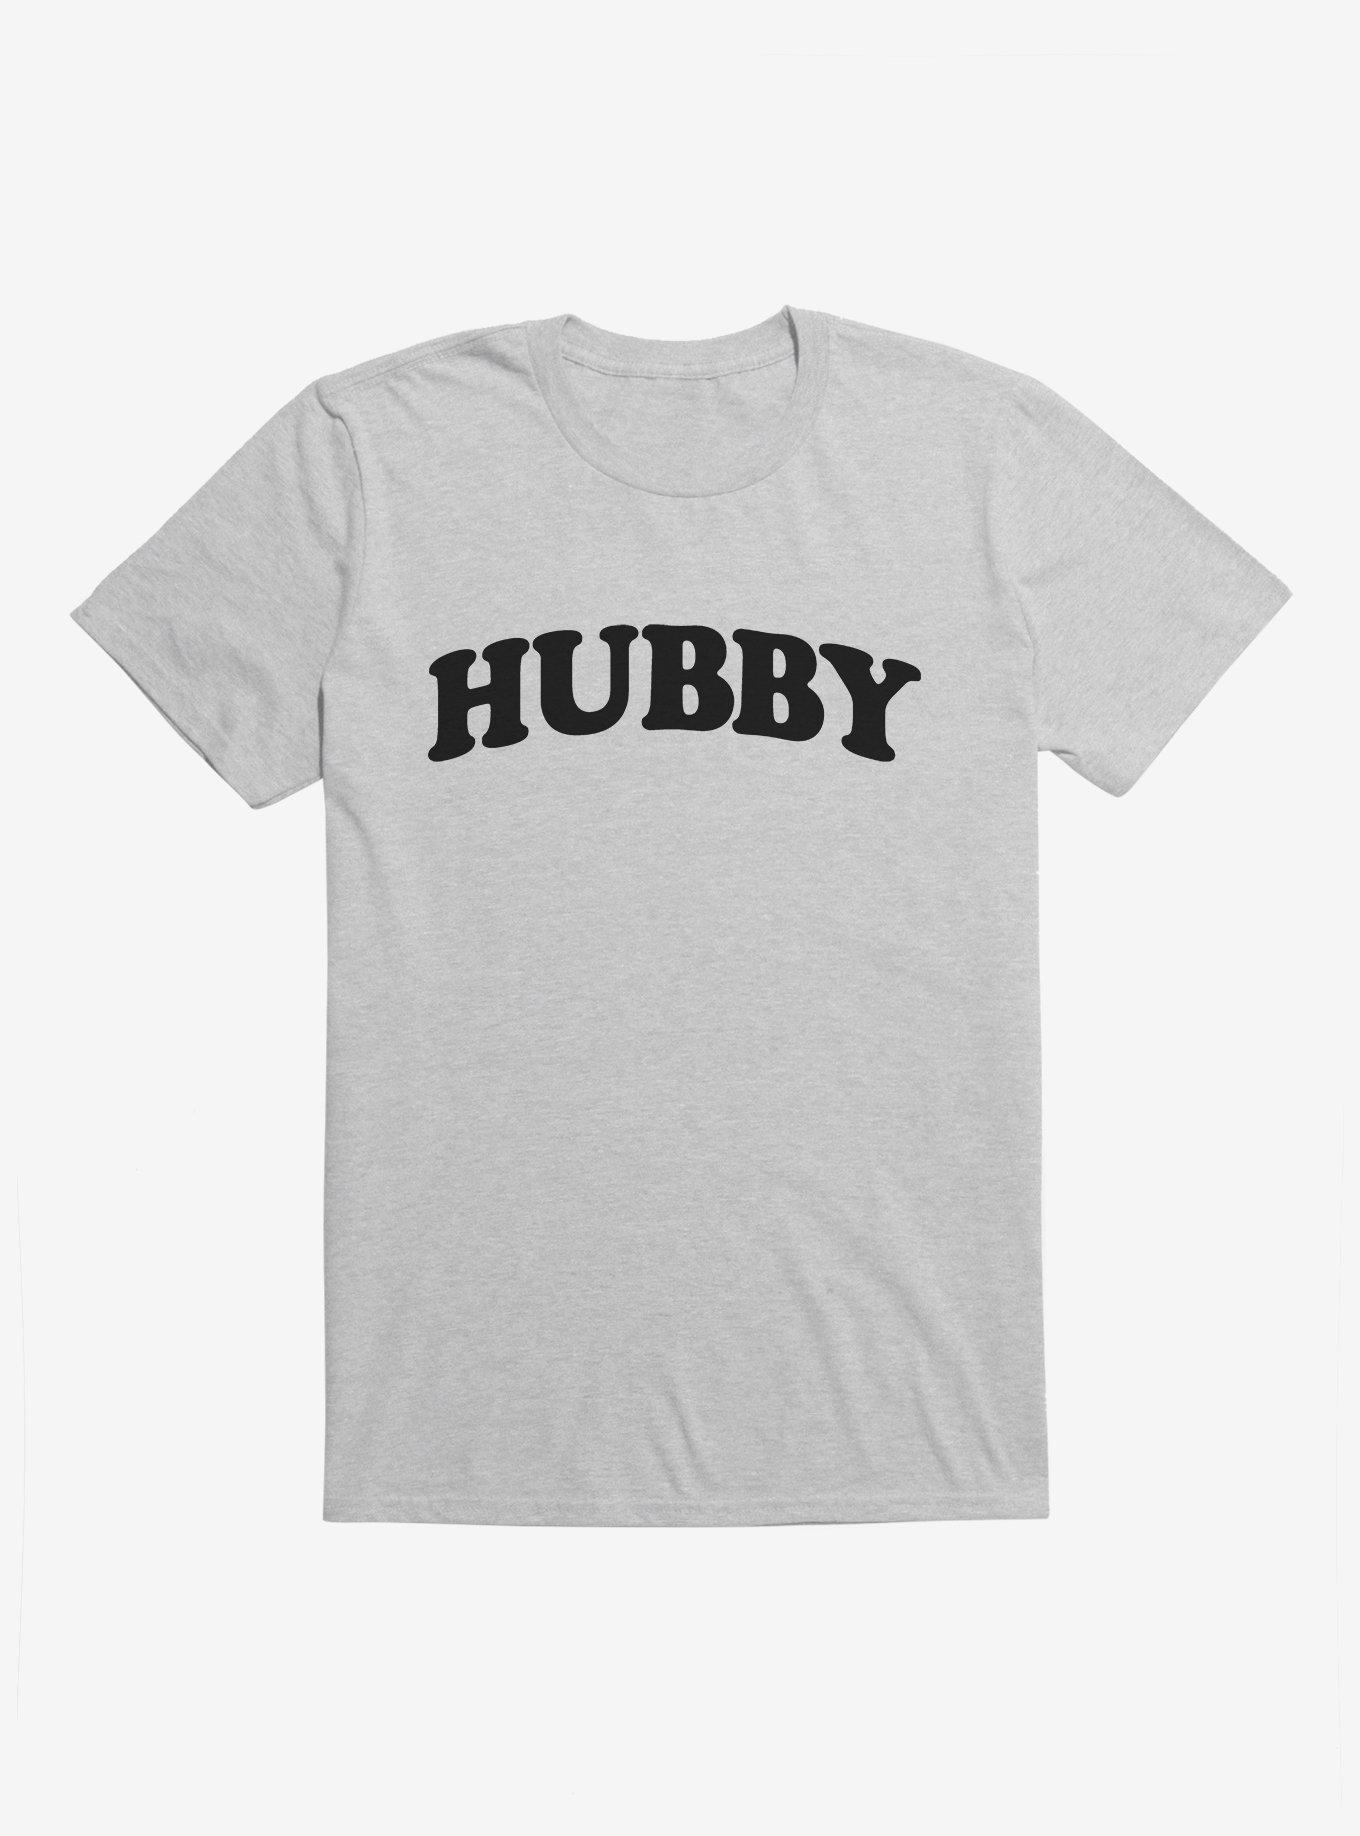 Hot Topic Hubby T-Shirt, HEATHER GREY, hi-res